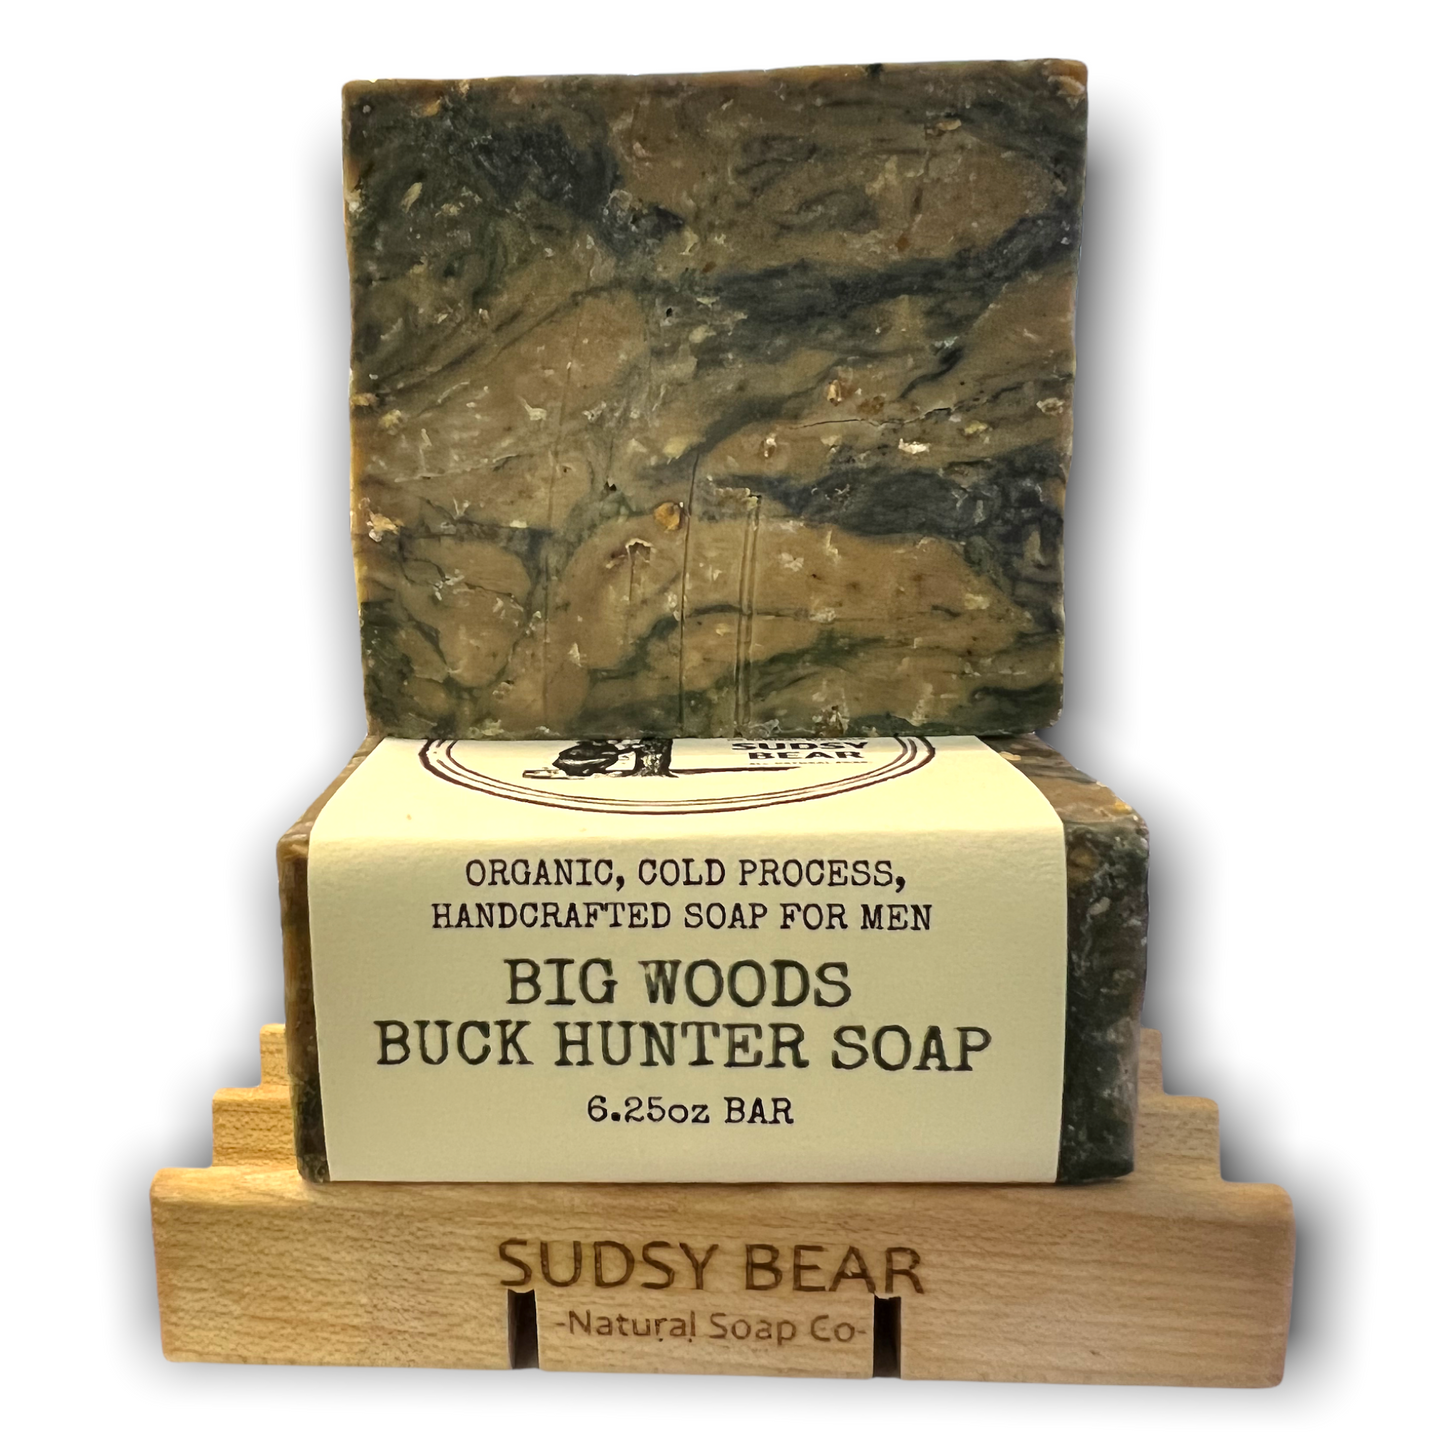 Behind The Suds: Big Woods Buck Hunter